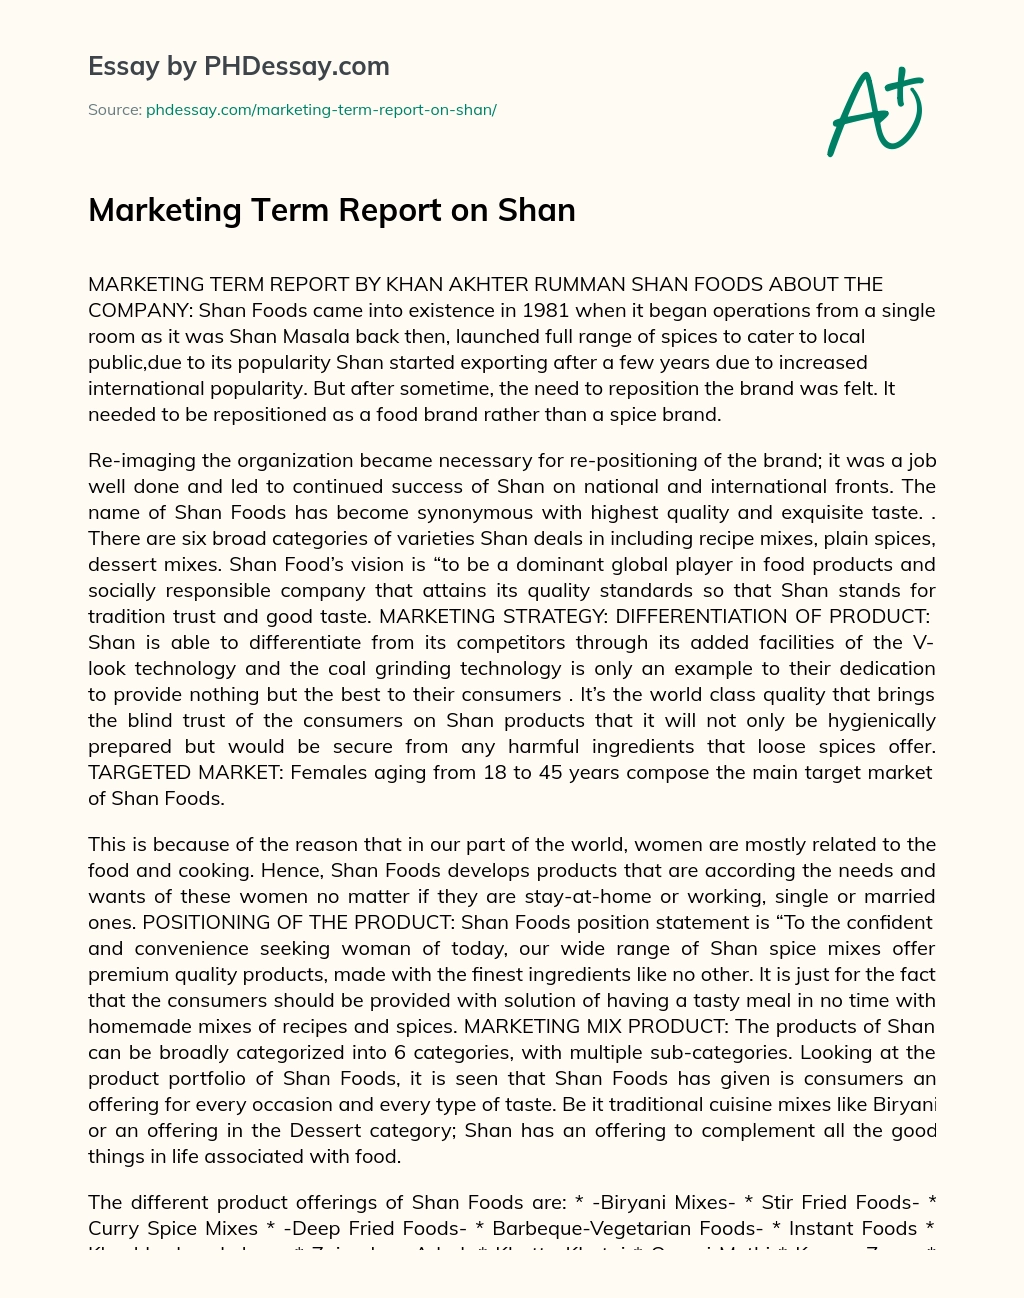 Marketing Term Report on Shan essay